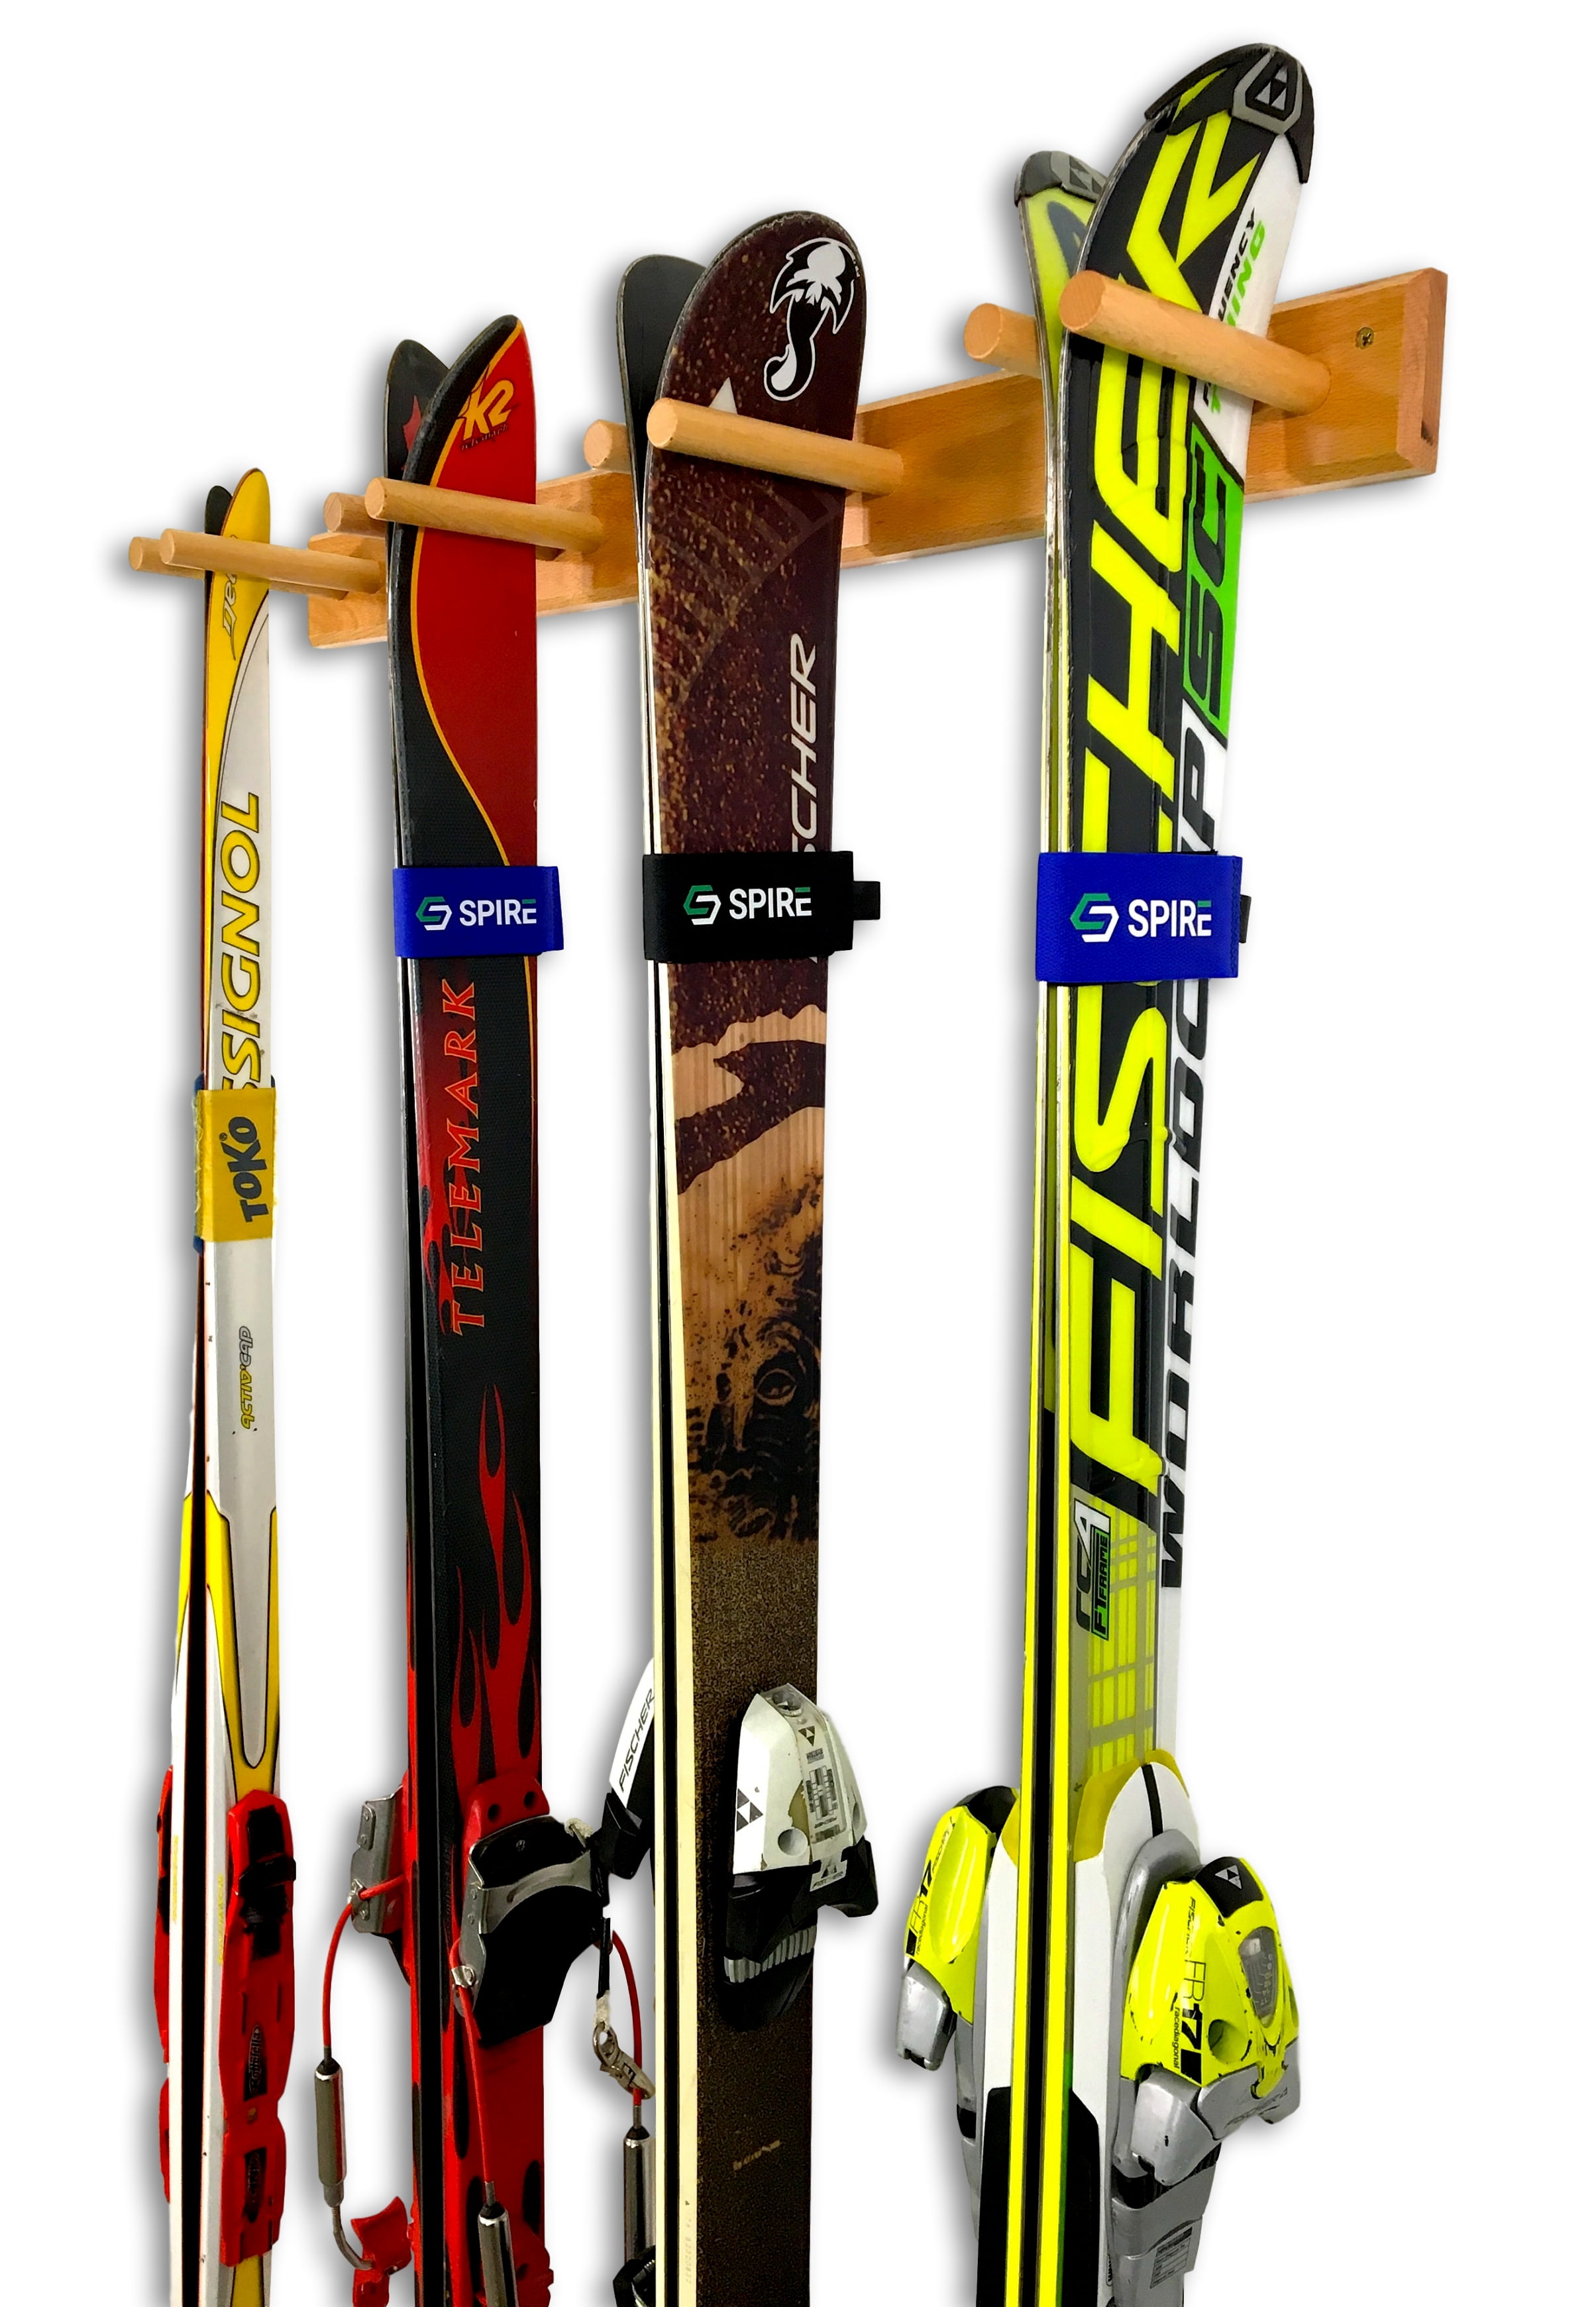 3 Pair Wood Ski Rack and Pole Storage/hanging wall mount rack-Free Shipping! 